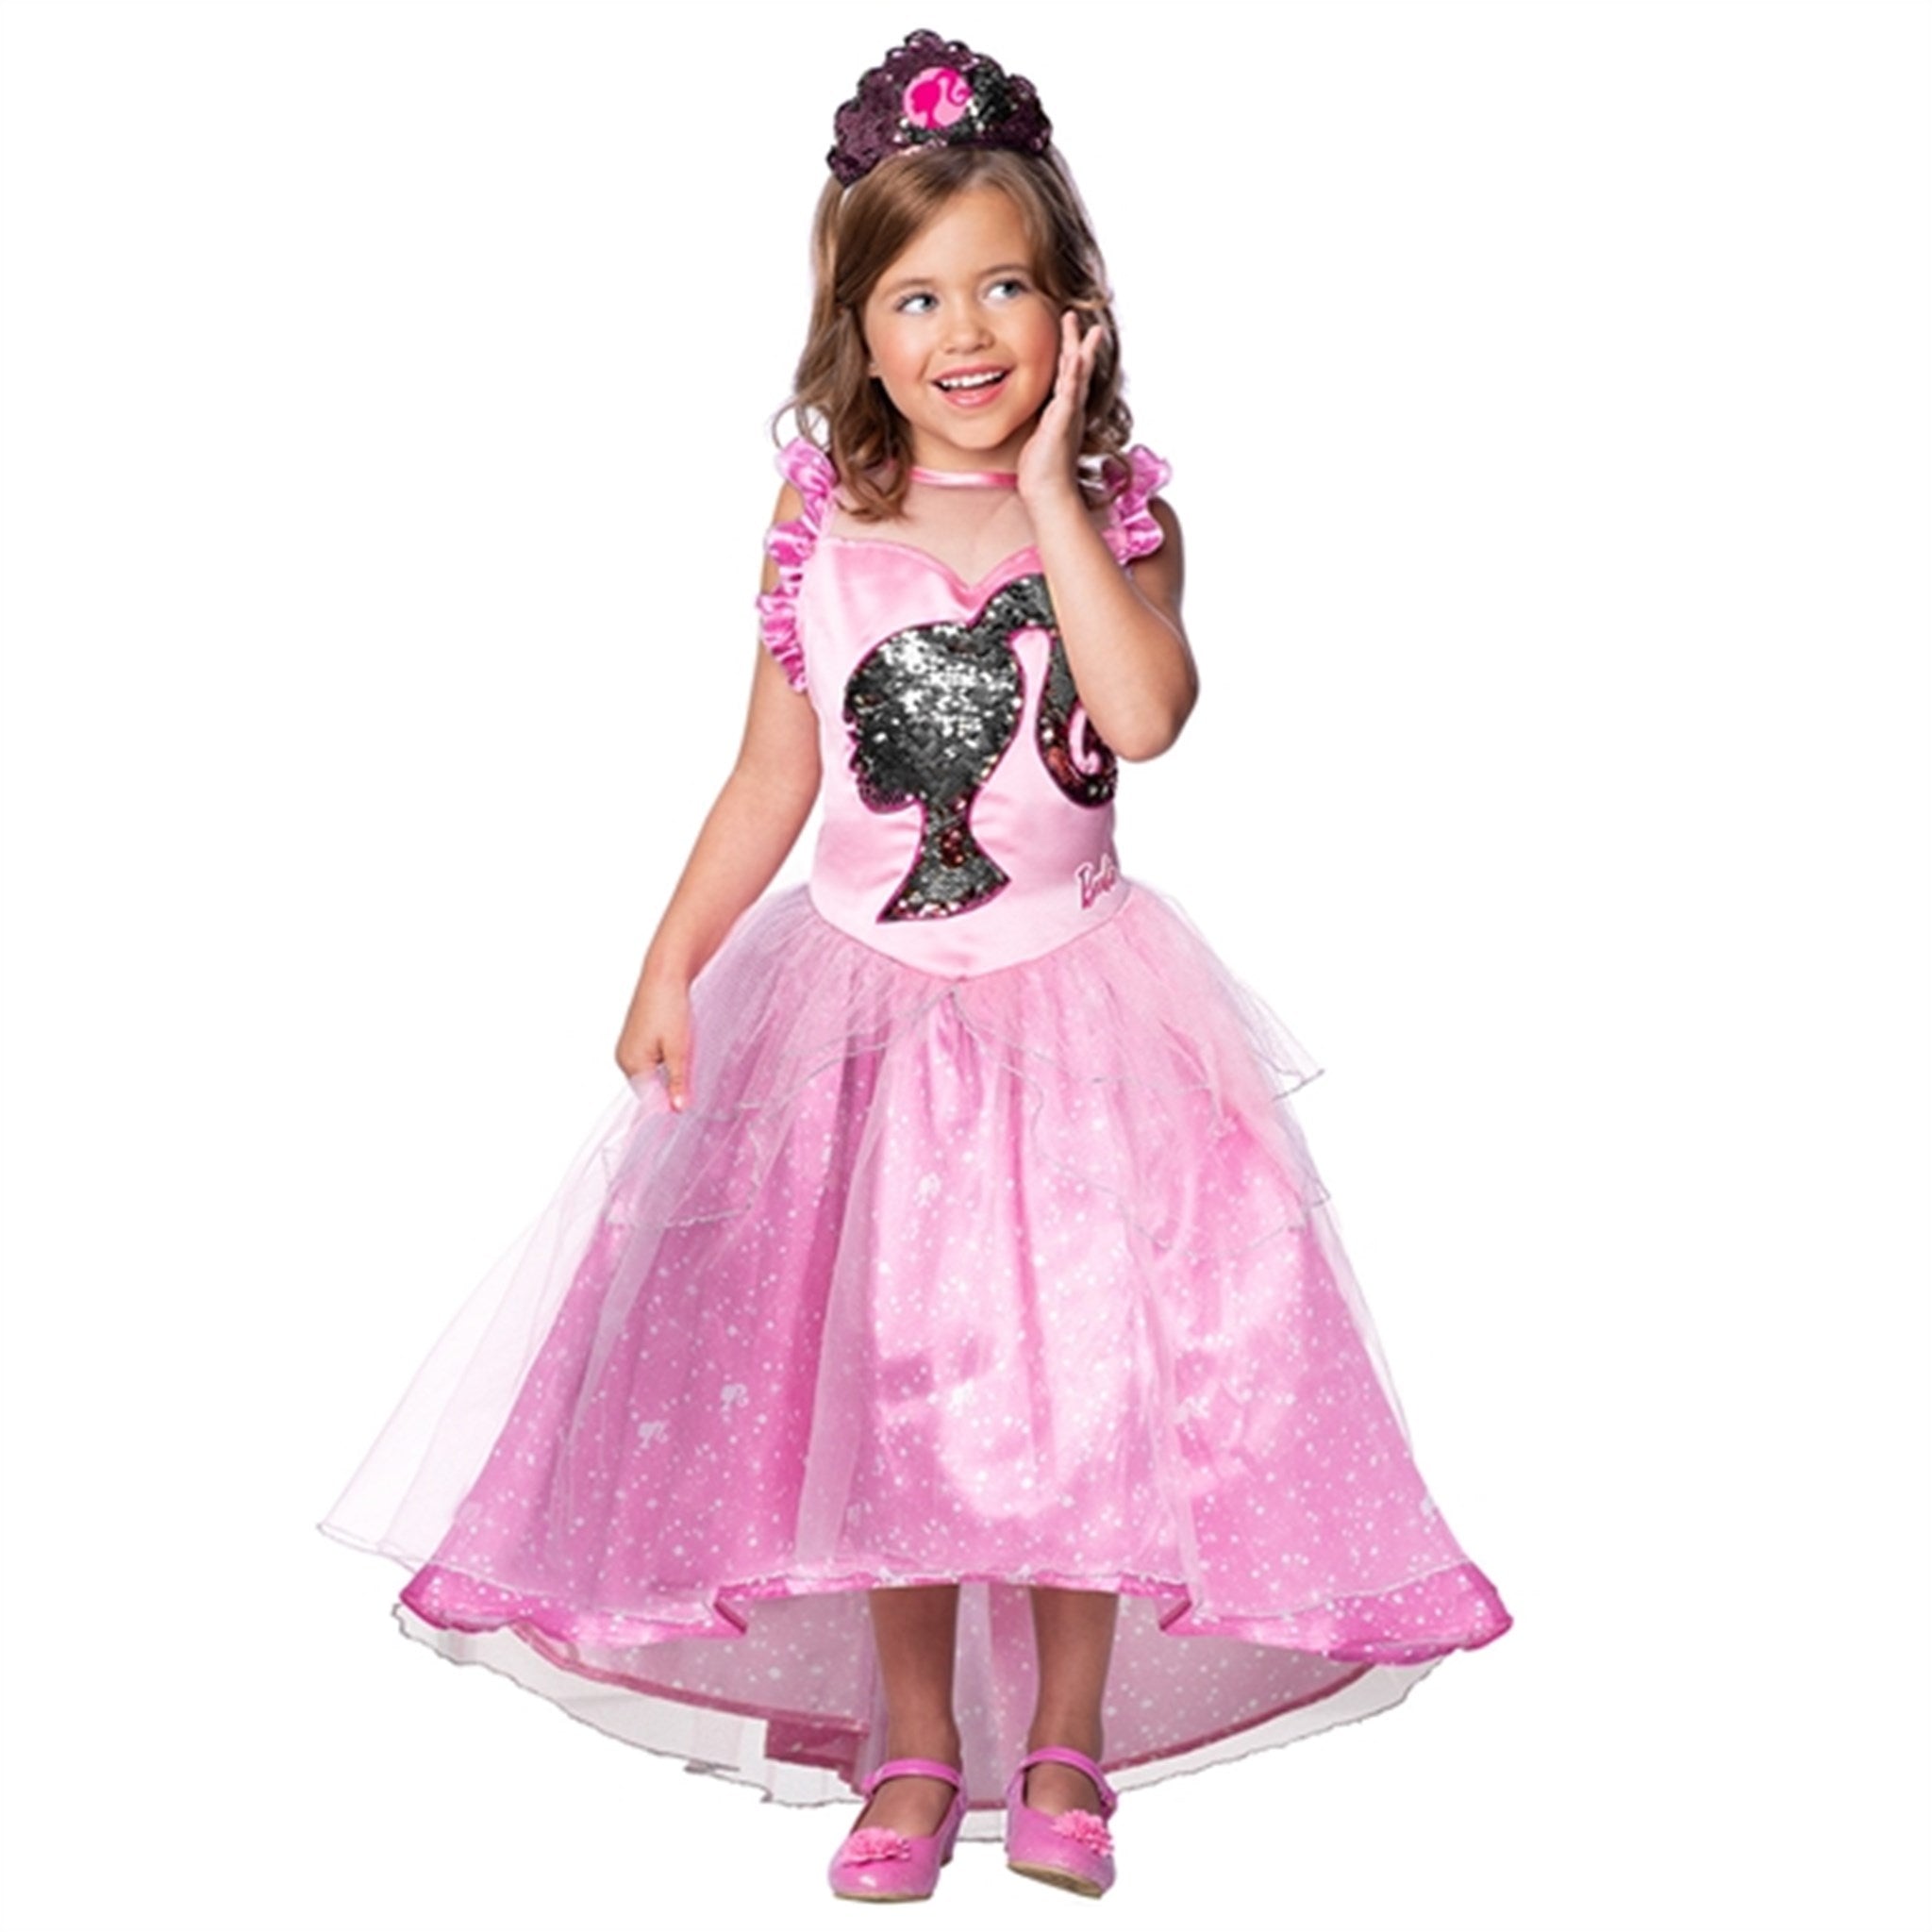 Rubies Barbie Princess Costume